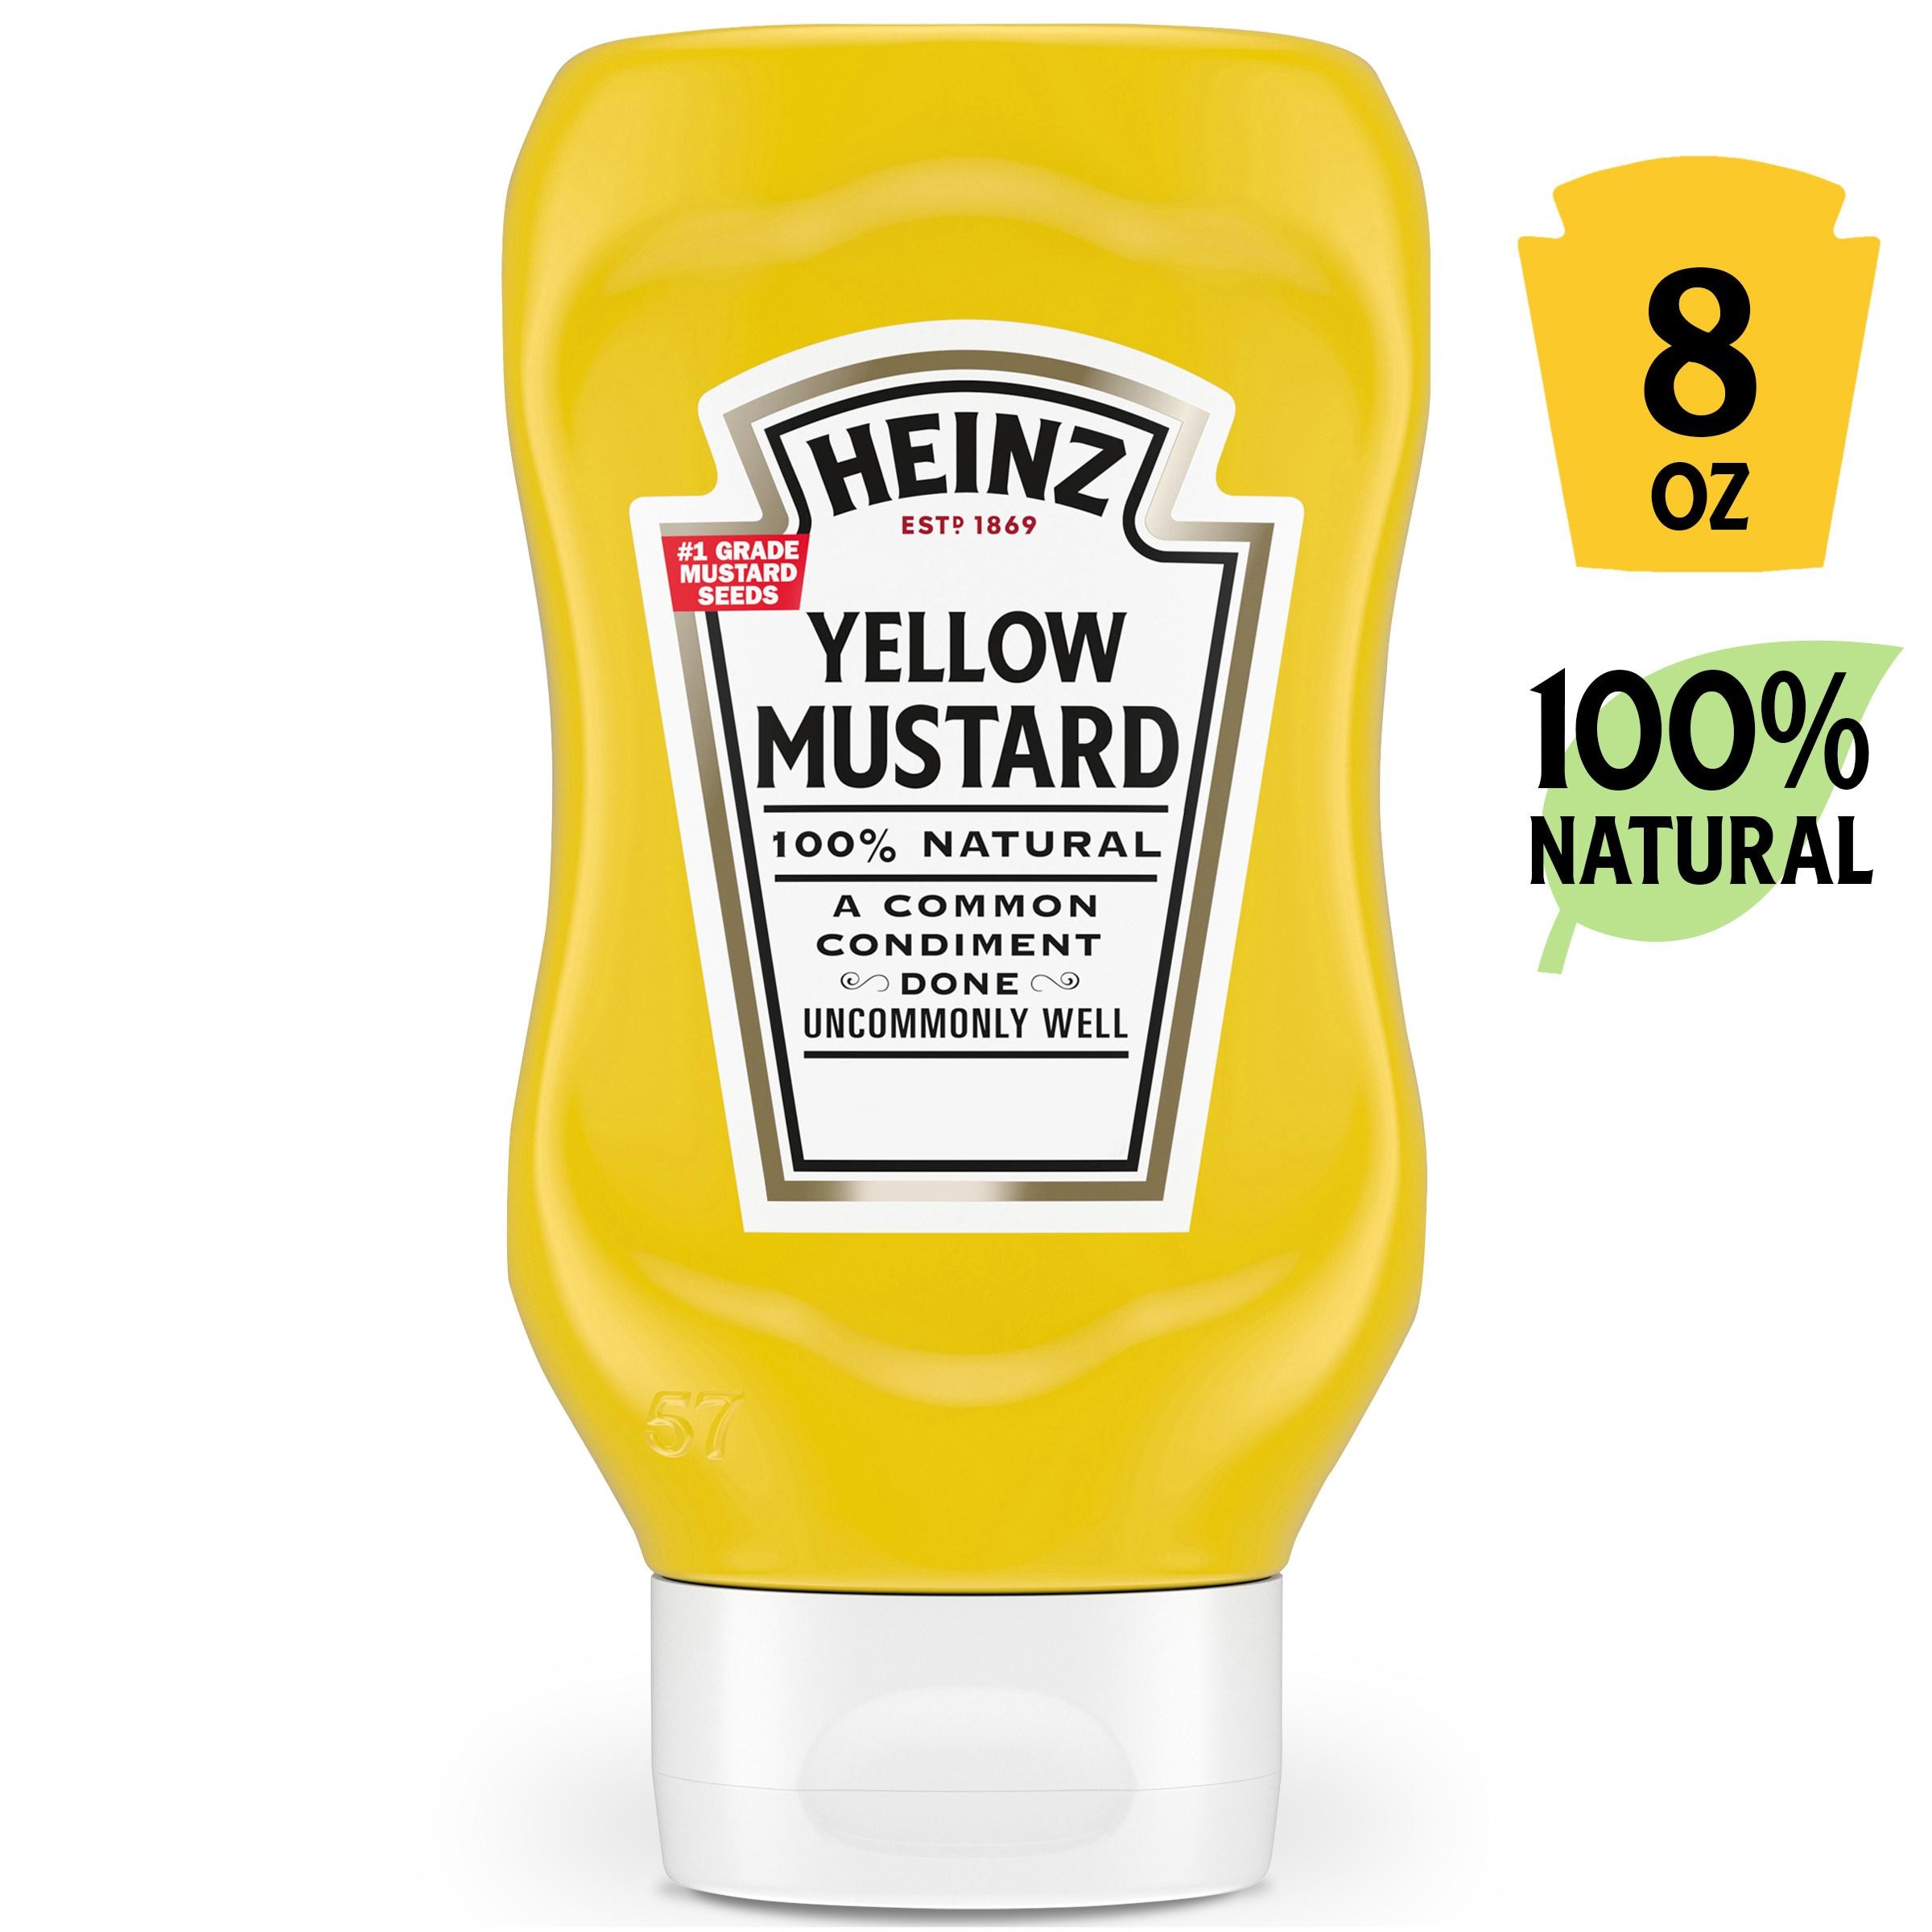 Heinz Yellow Mustard, 8 Oz Bottle